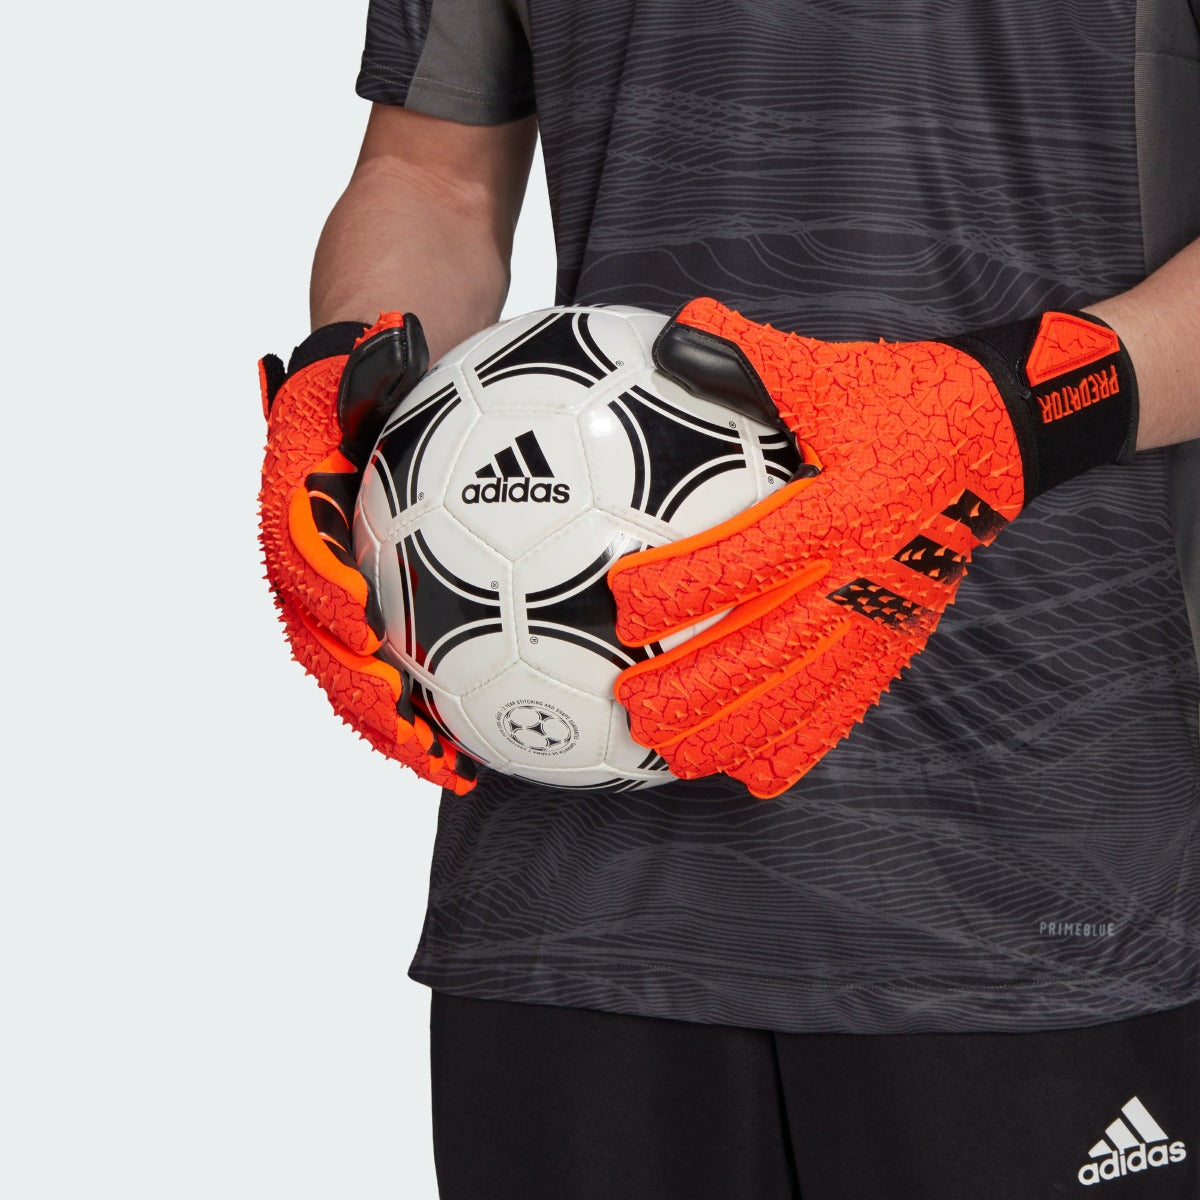 Adidas Predator Pro Ultimate Goalkeeper Gloves - Solar Red-Black (Model - Pair)